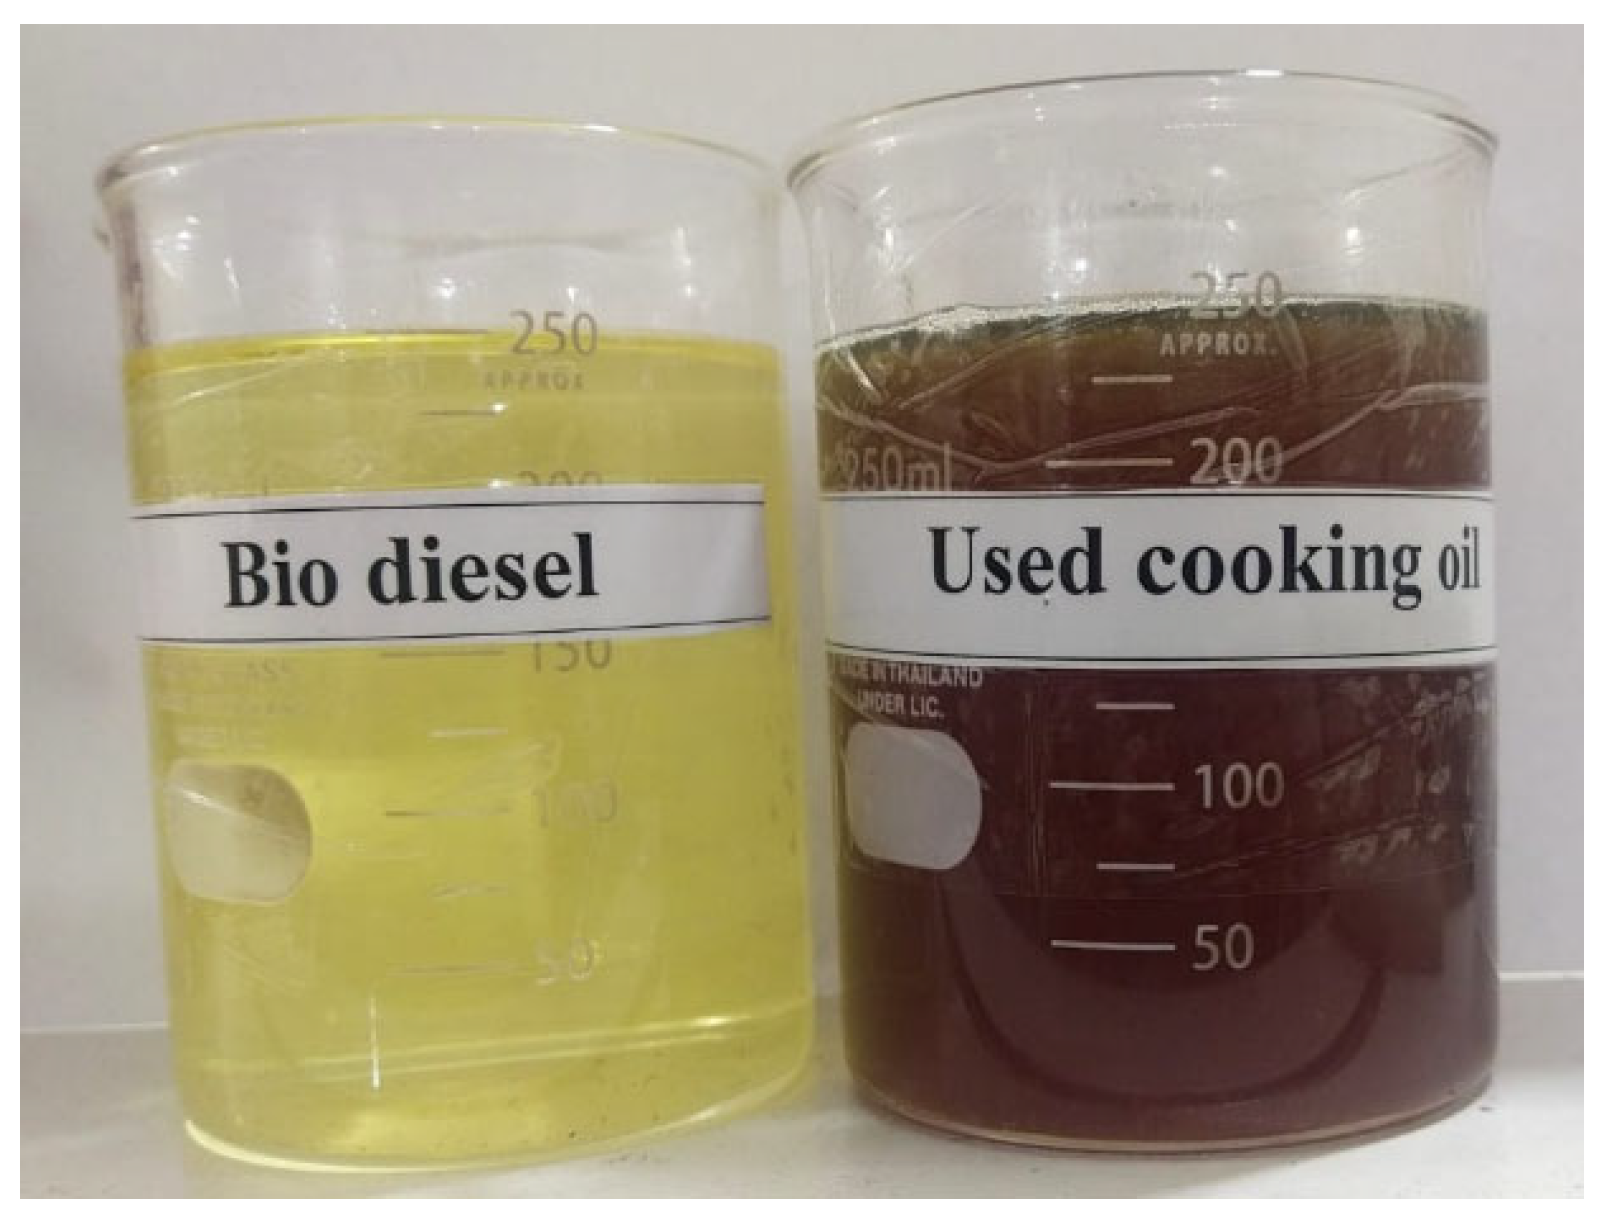 Measuring jug for mixing fuel - Measuring jug: For preparing fuel mix